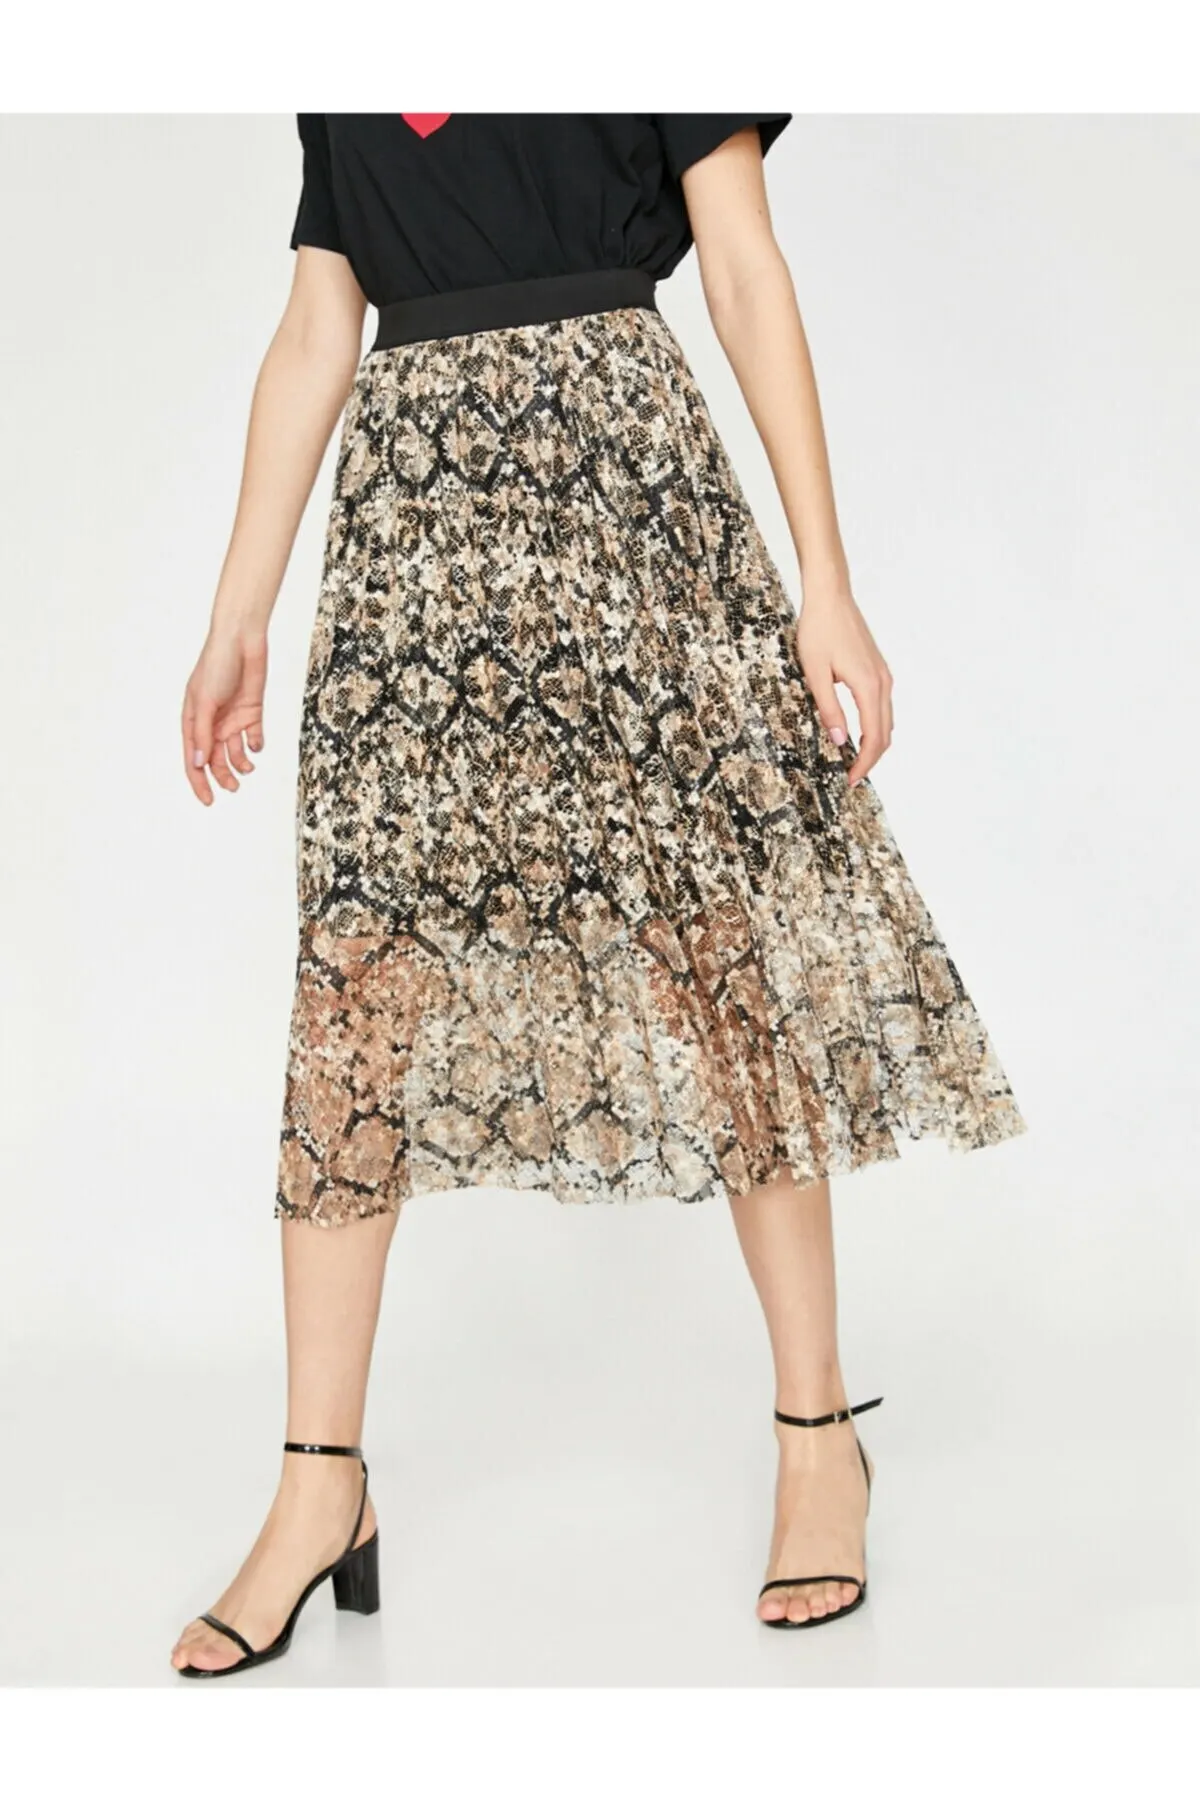 

Women's Skirt Ecru Snakeskin pattern Skirt Summer Cute Style Empire Slim Folds Above Knee Sexy Mini Skirts